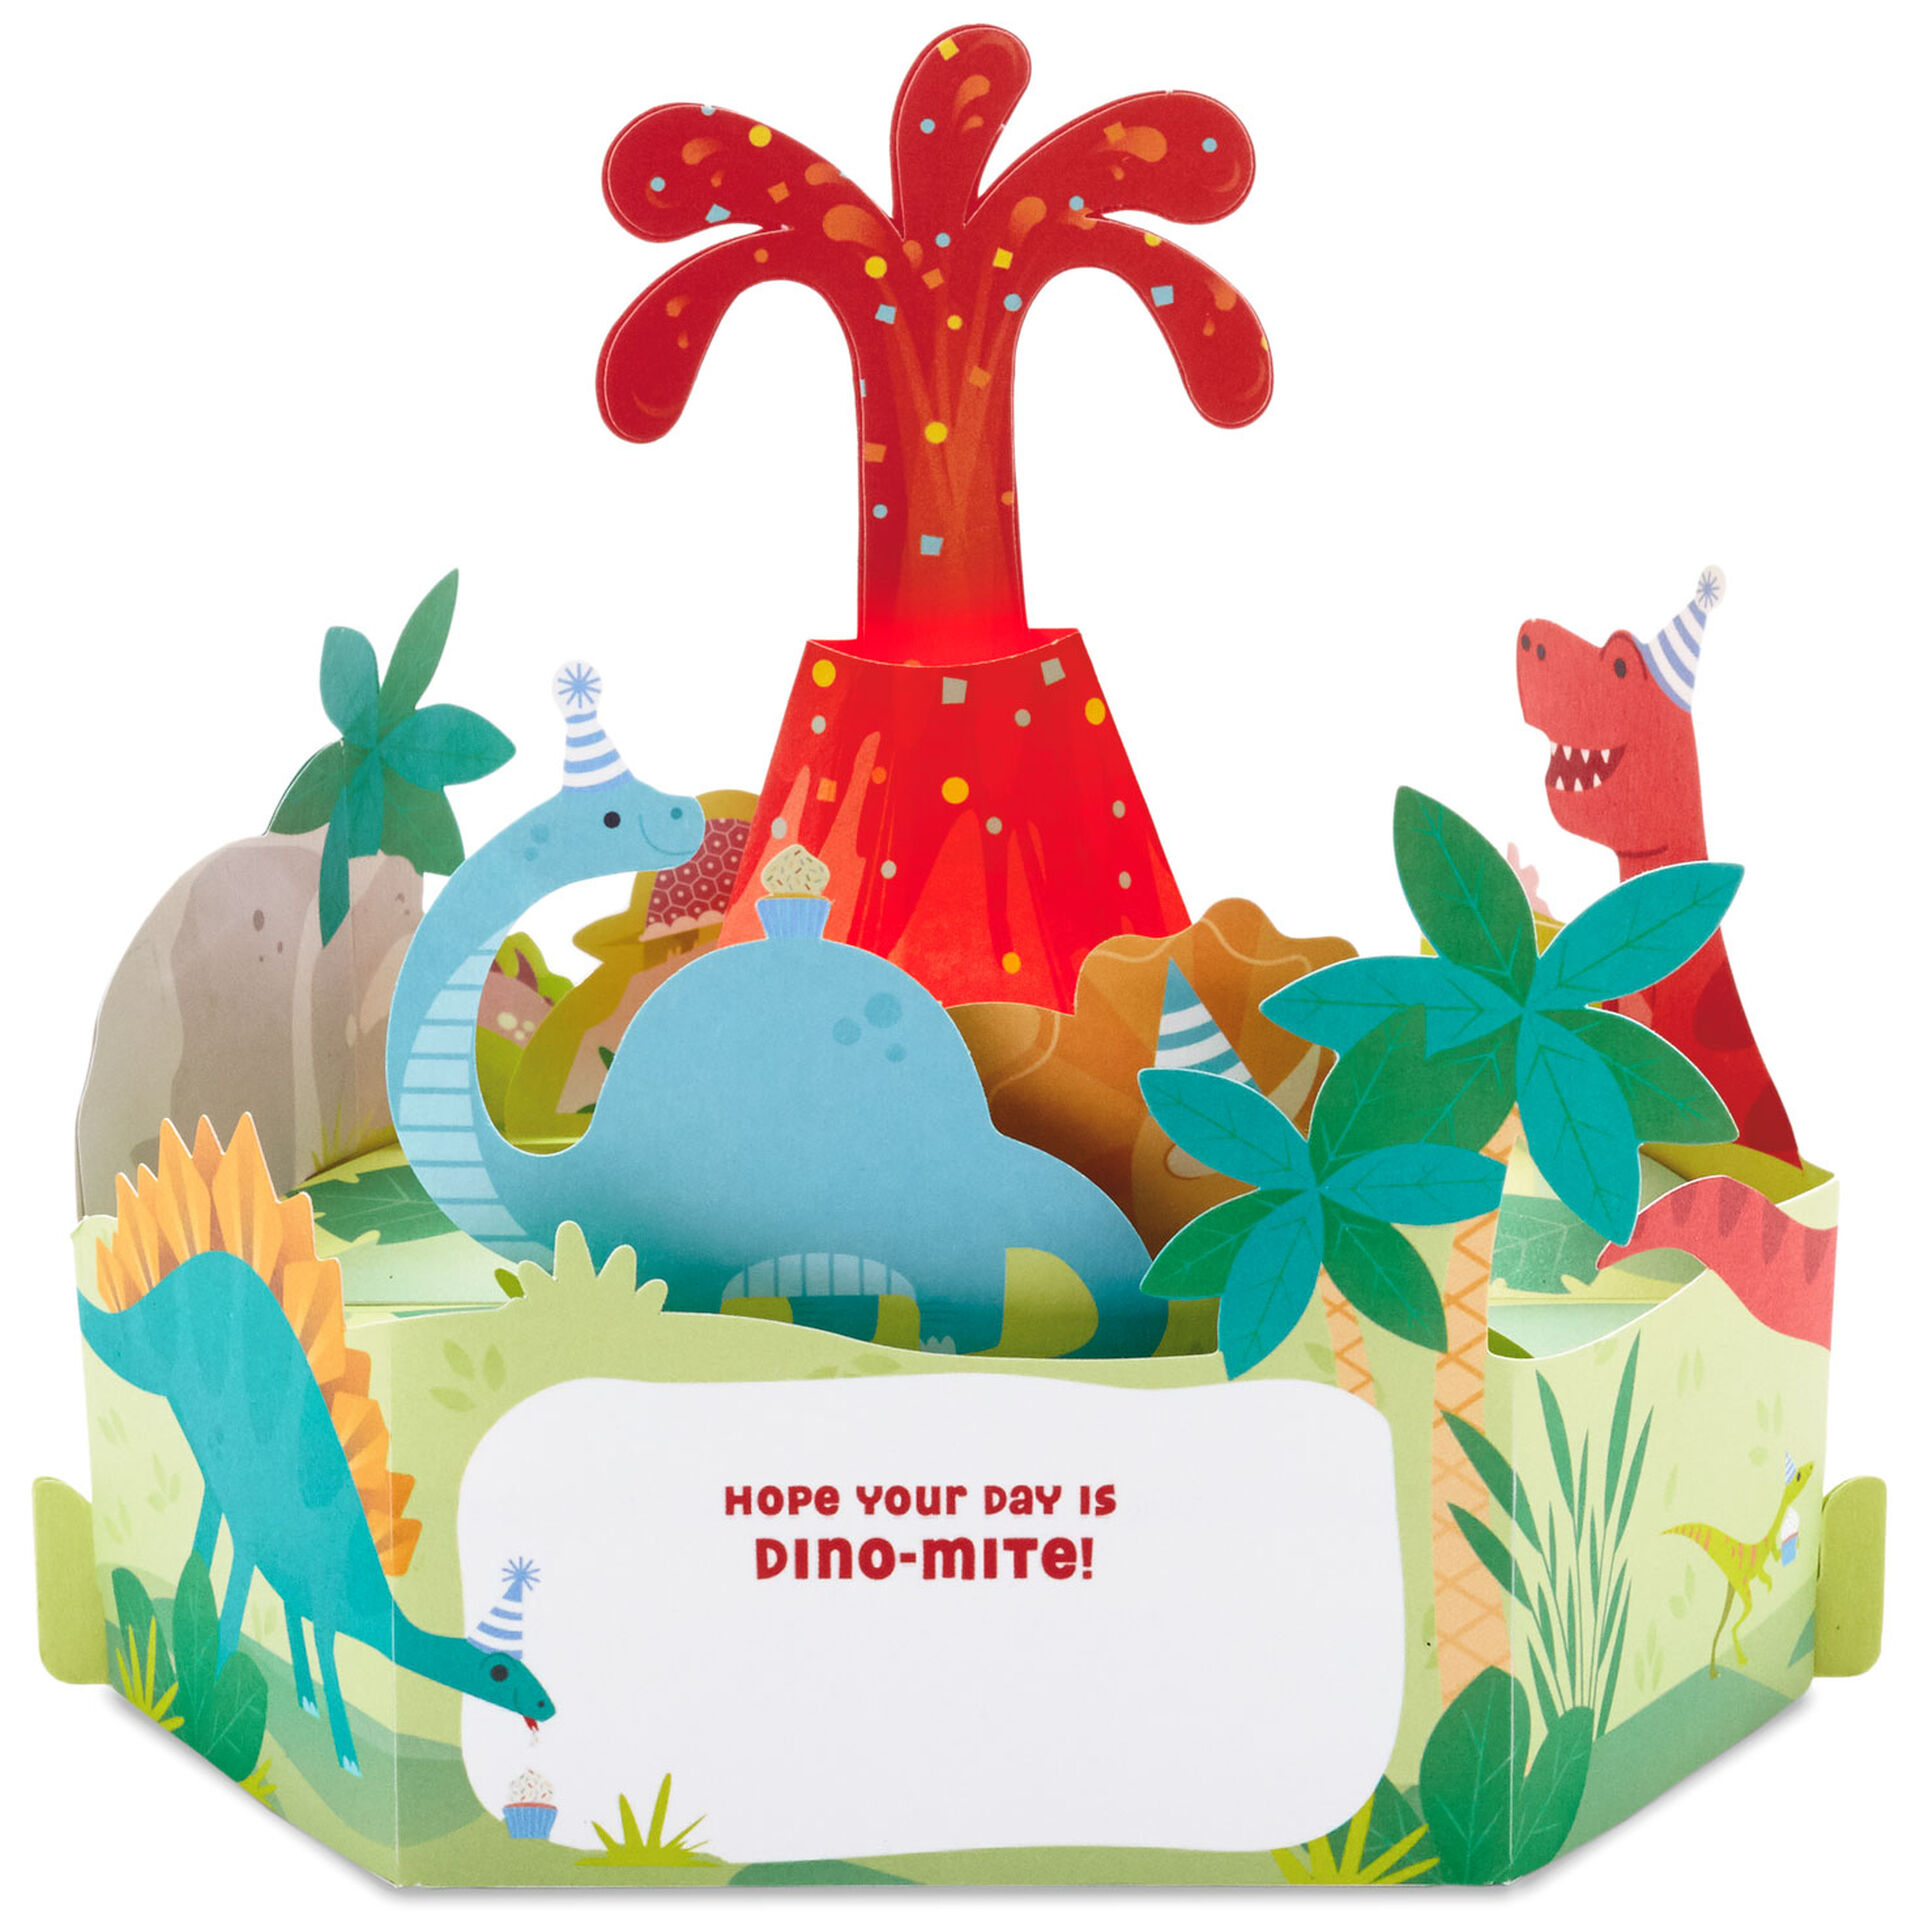 Dinosaurs-Music-&-Light-3D-PopUp-Birthday-Card-for-Kids_999TNG1429_02